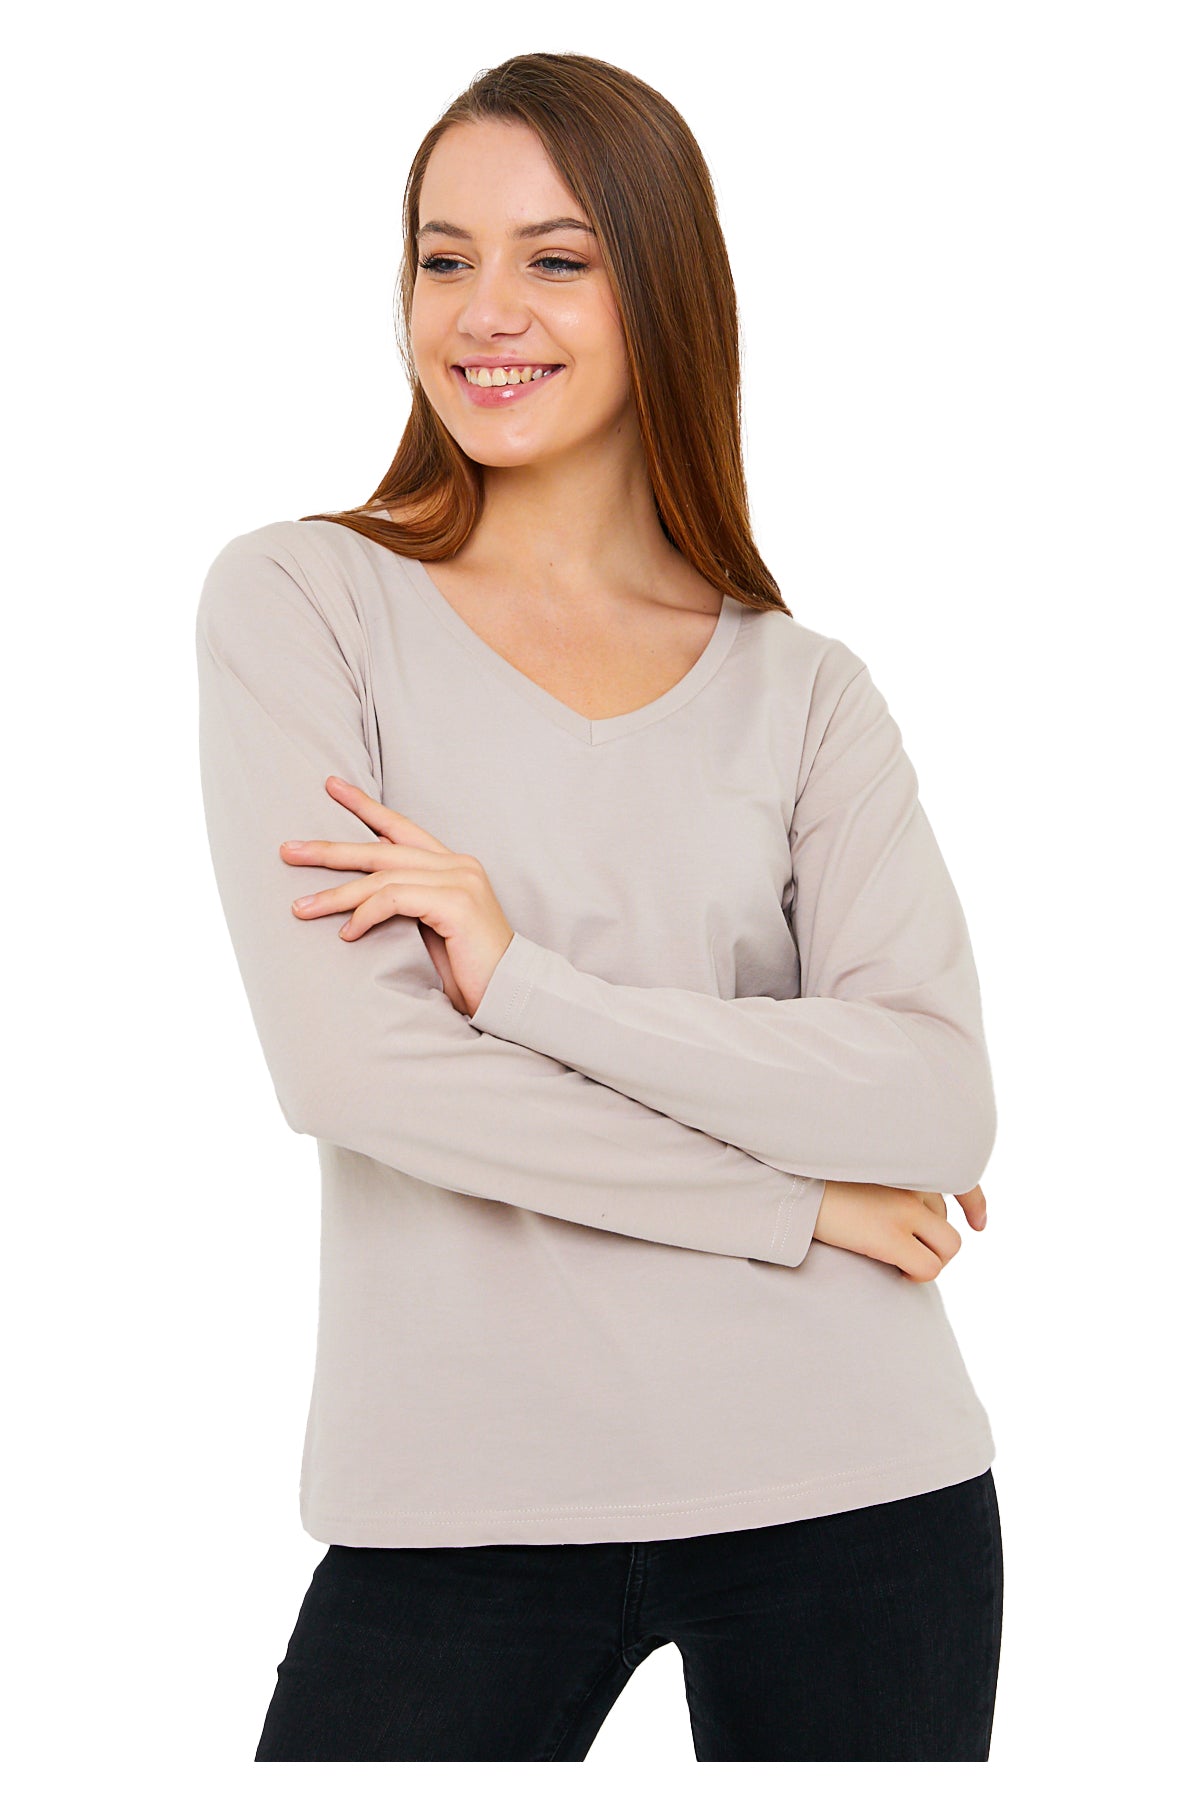 Long Sleeve V-Neck Shirts for Women & Girls - Colorful Pima Cotton